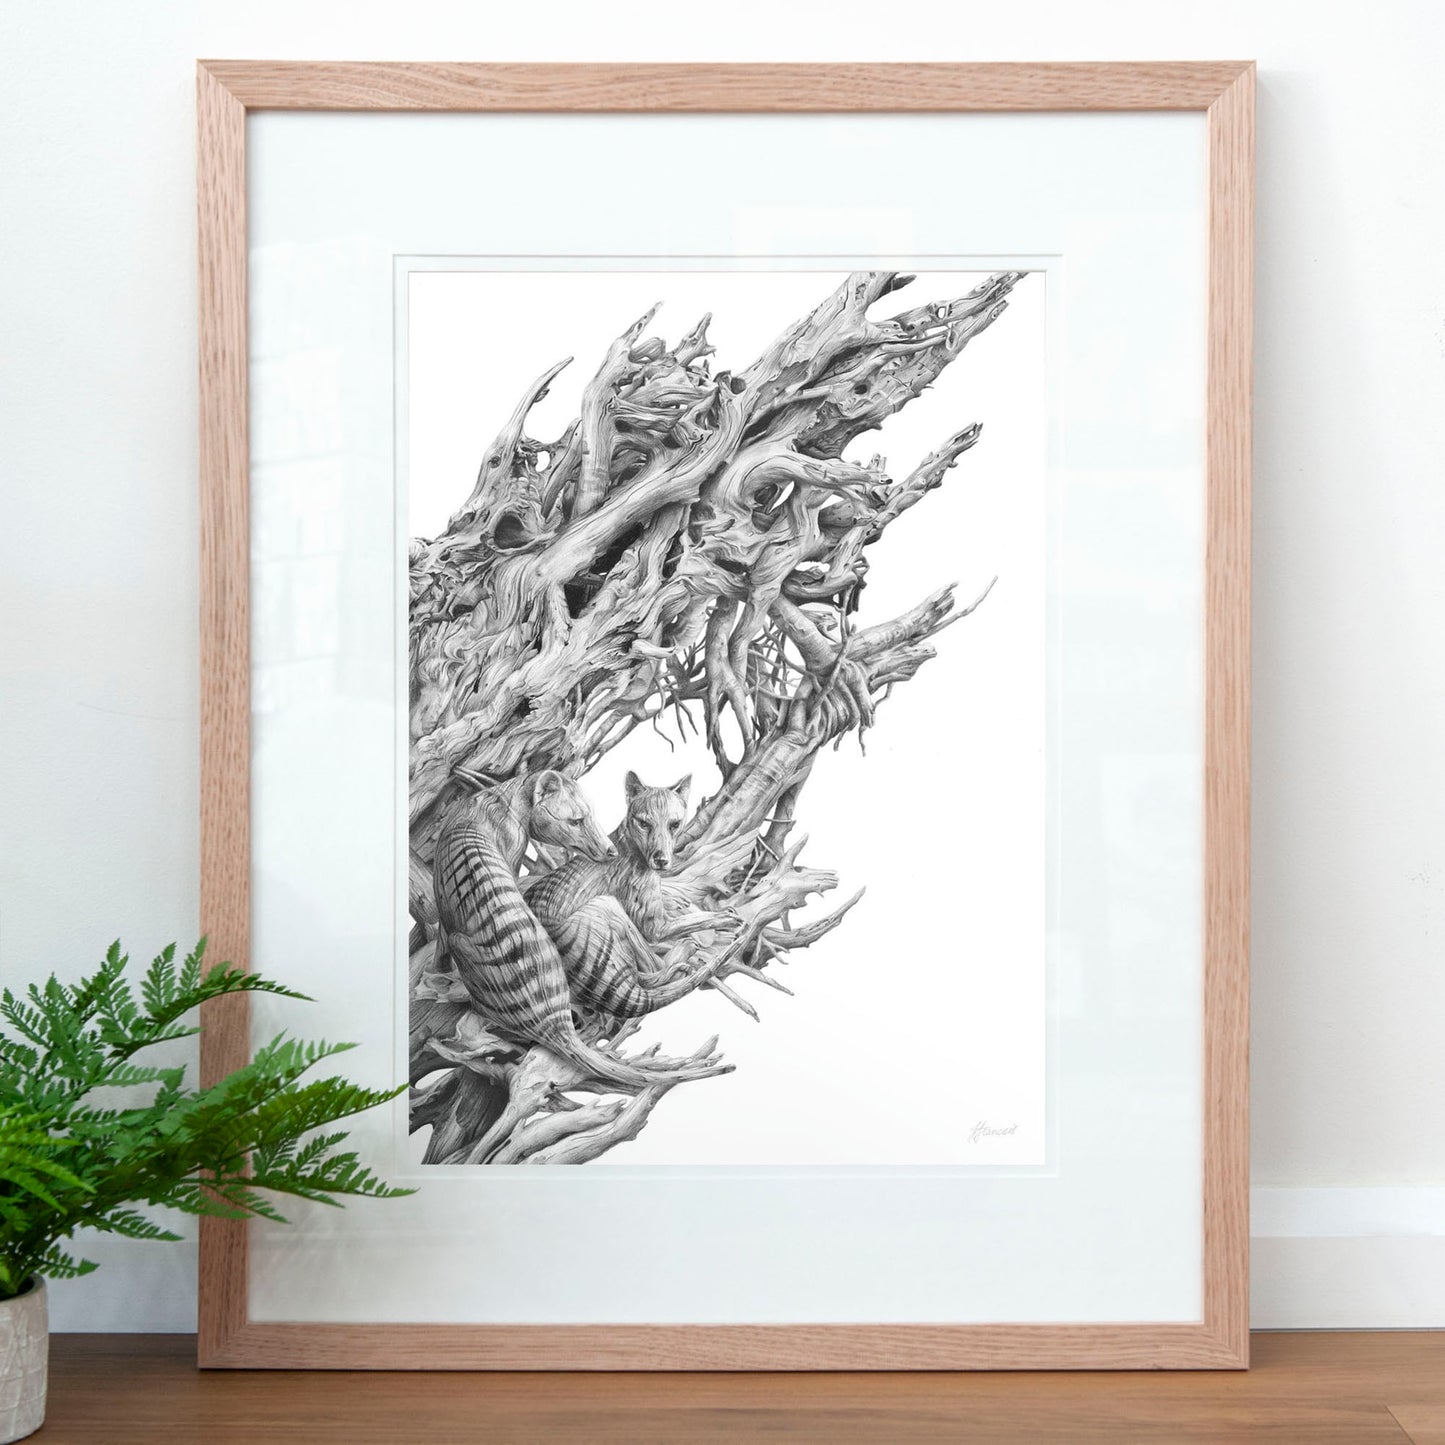 'Driftwood Thylacine' art print